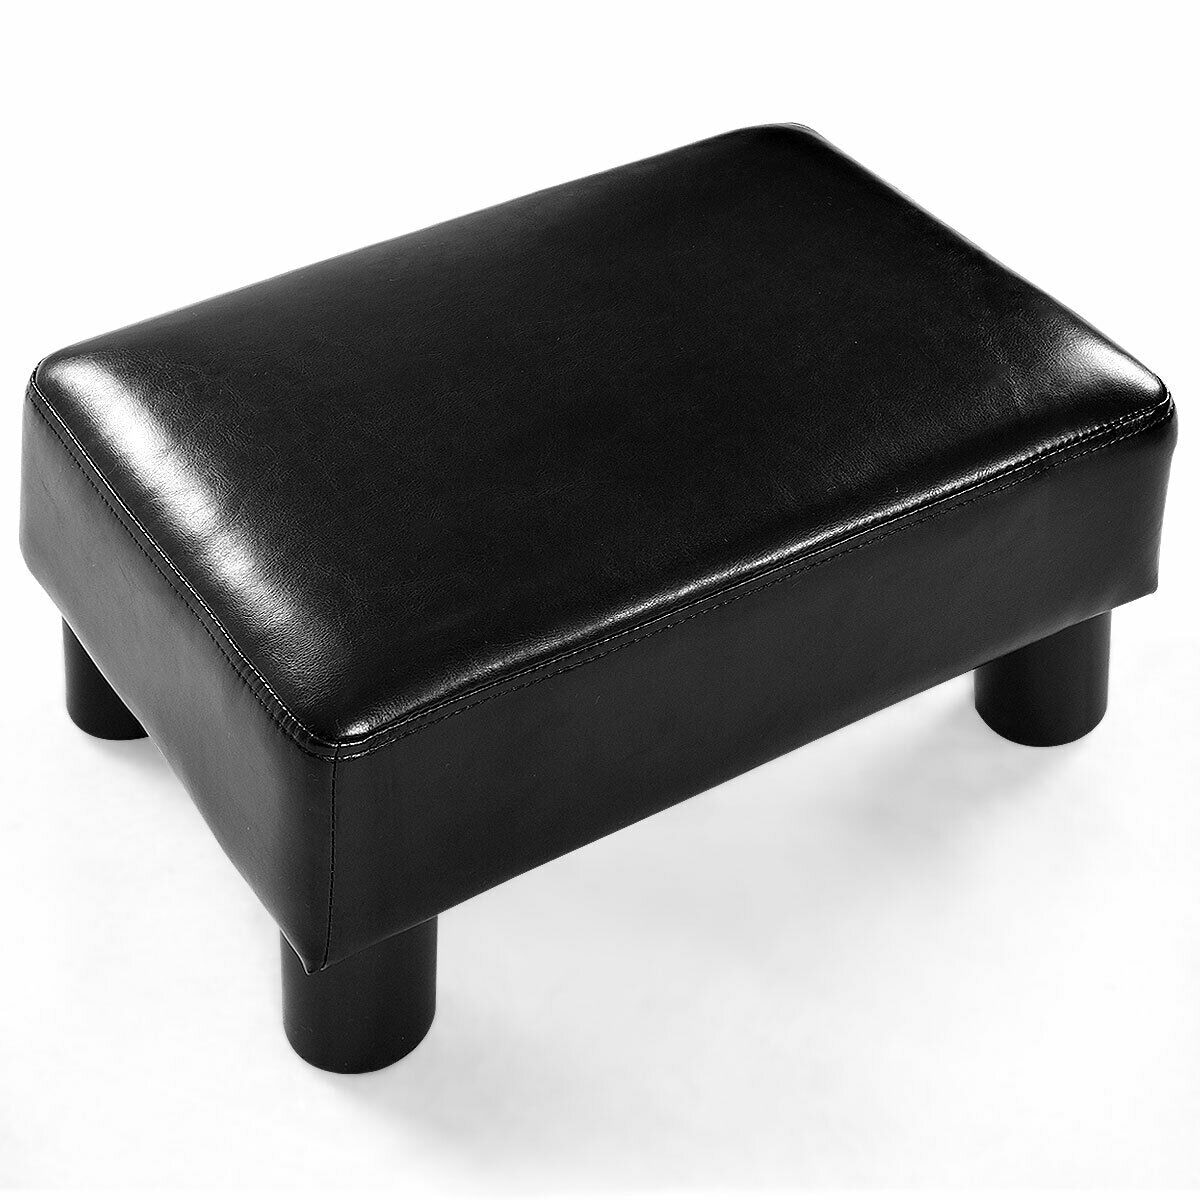 Costway Small Ottoman Footrest PU Leather Footstool Rectangular Seat Stool  Black